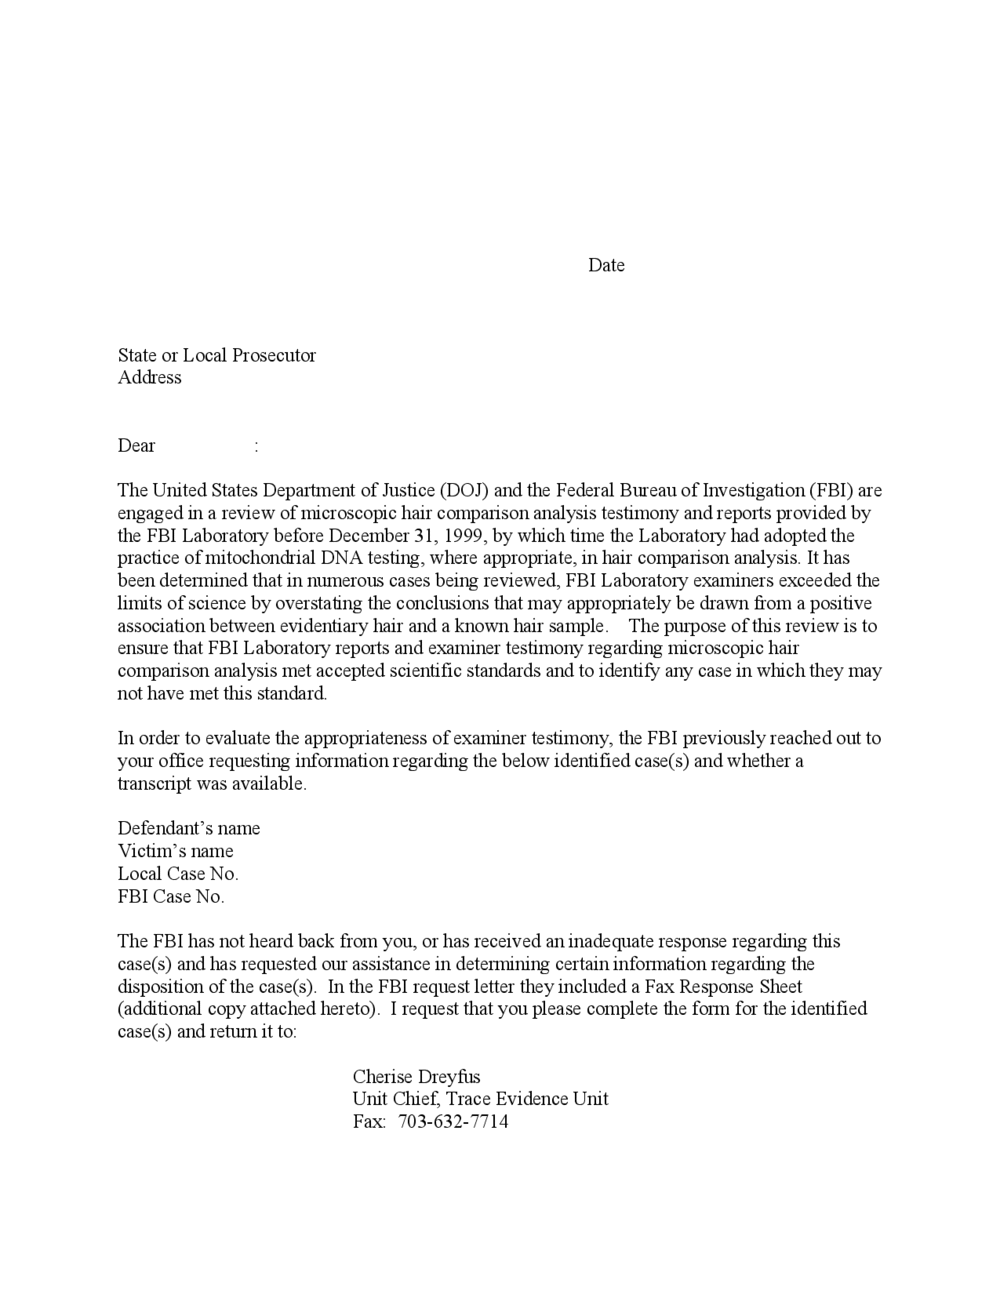 Sample Letter to Prosecutors — FBI